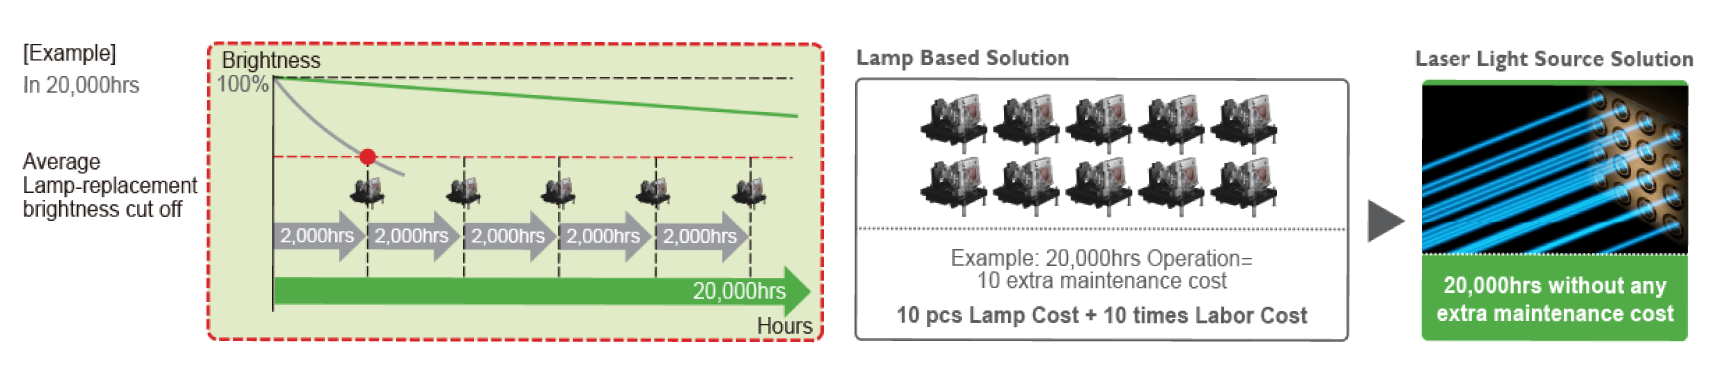 BenQ BlueCore laser projectors guarantees low maintenance cost